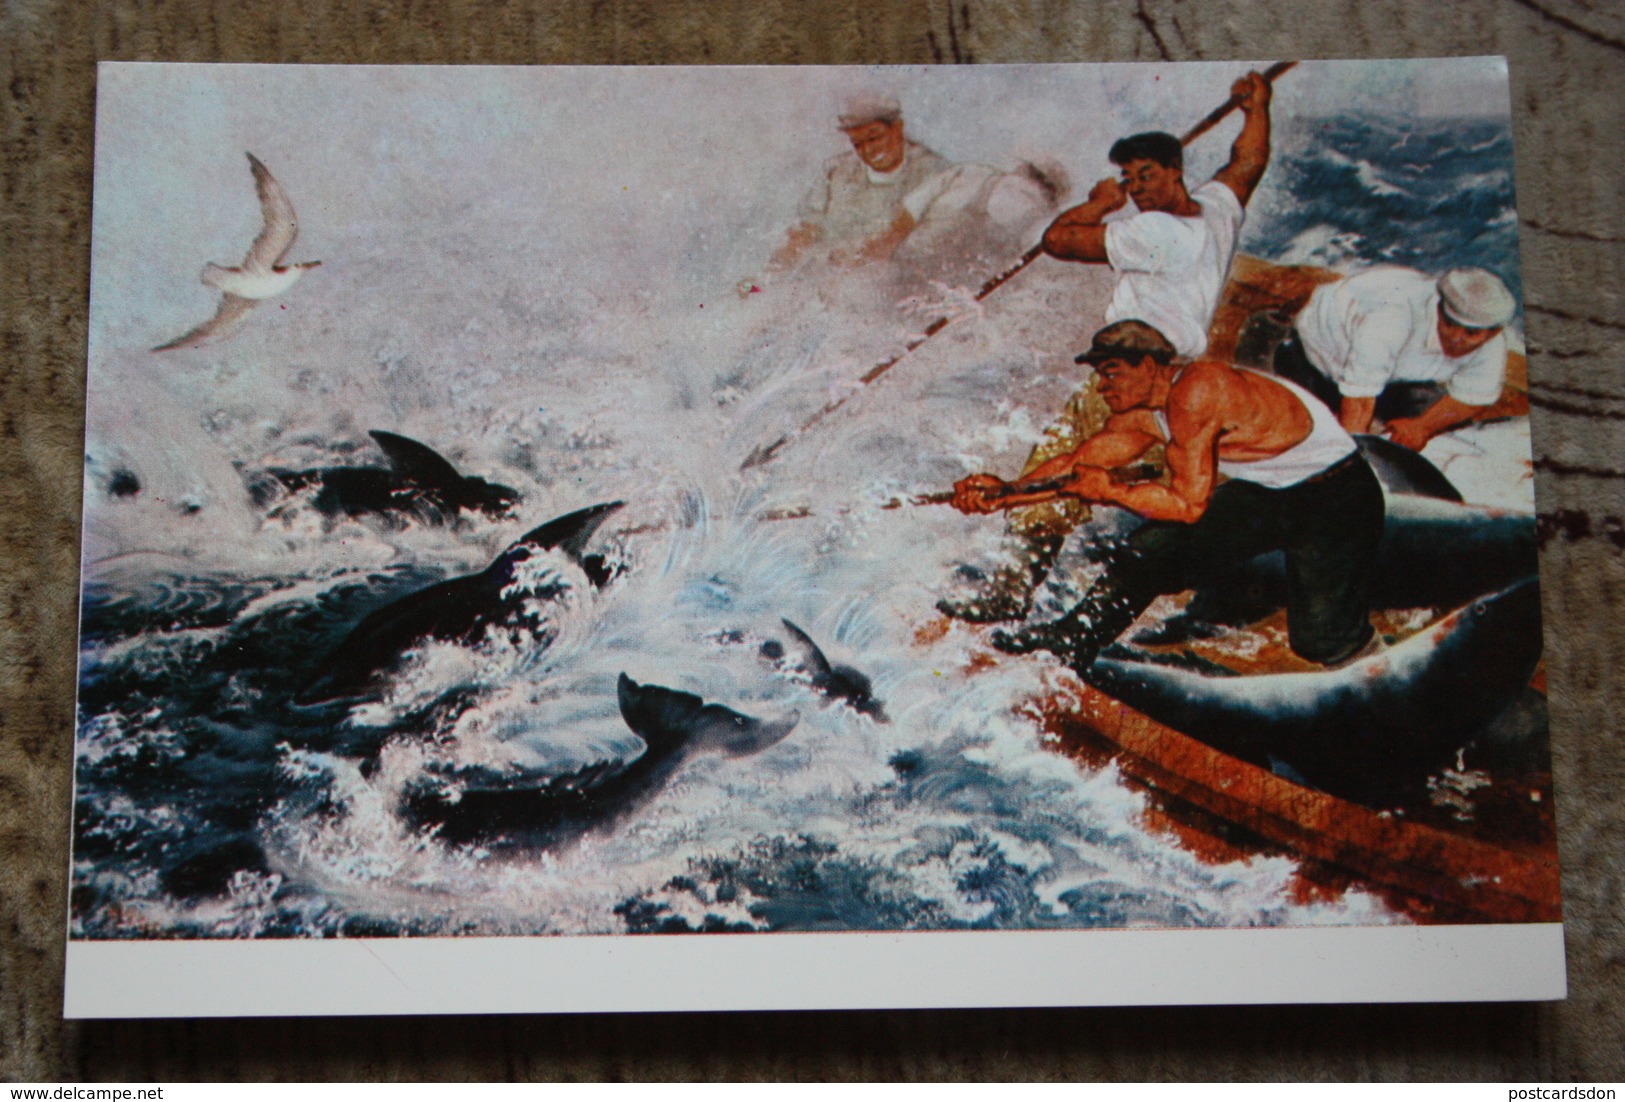 KOREA NORTH PROPAGANDA Postcard "A BIG HAUL" By Jung Jong Yu  1950s  Fishing - Korea, North